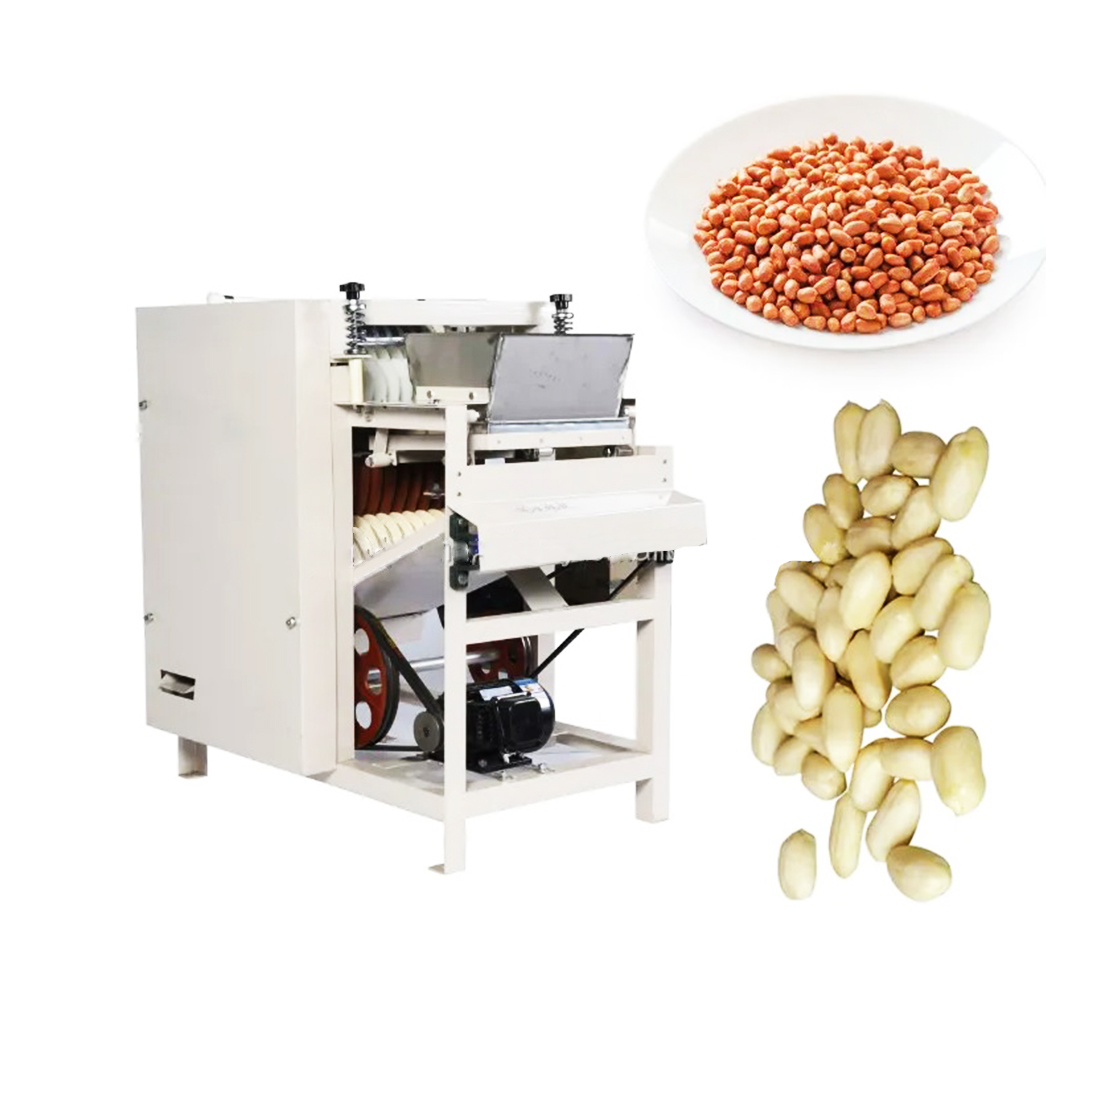 Almond peeling machine